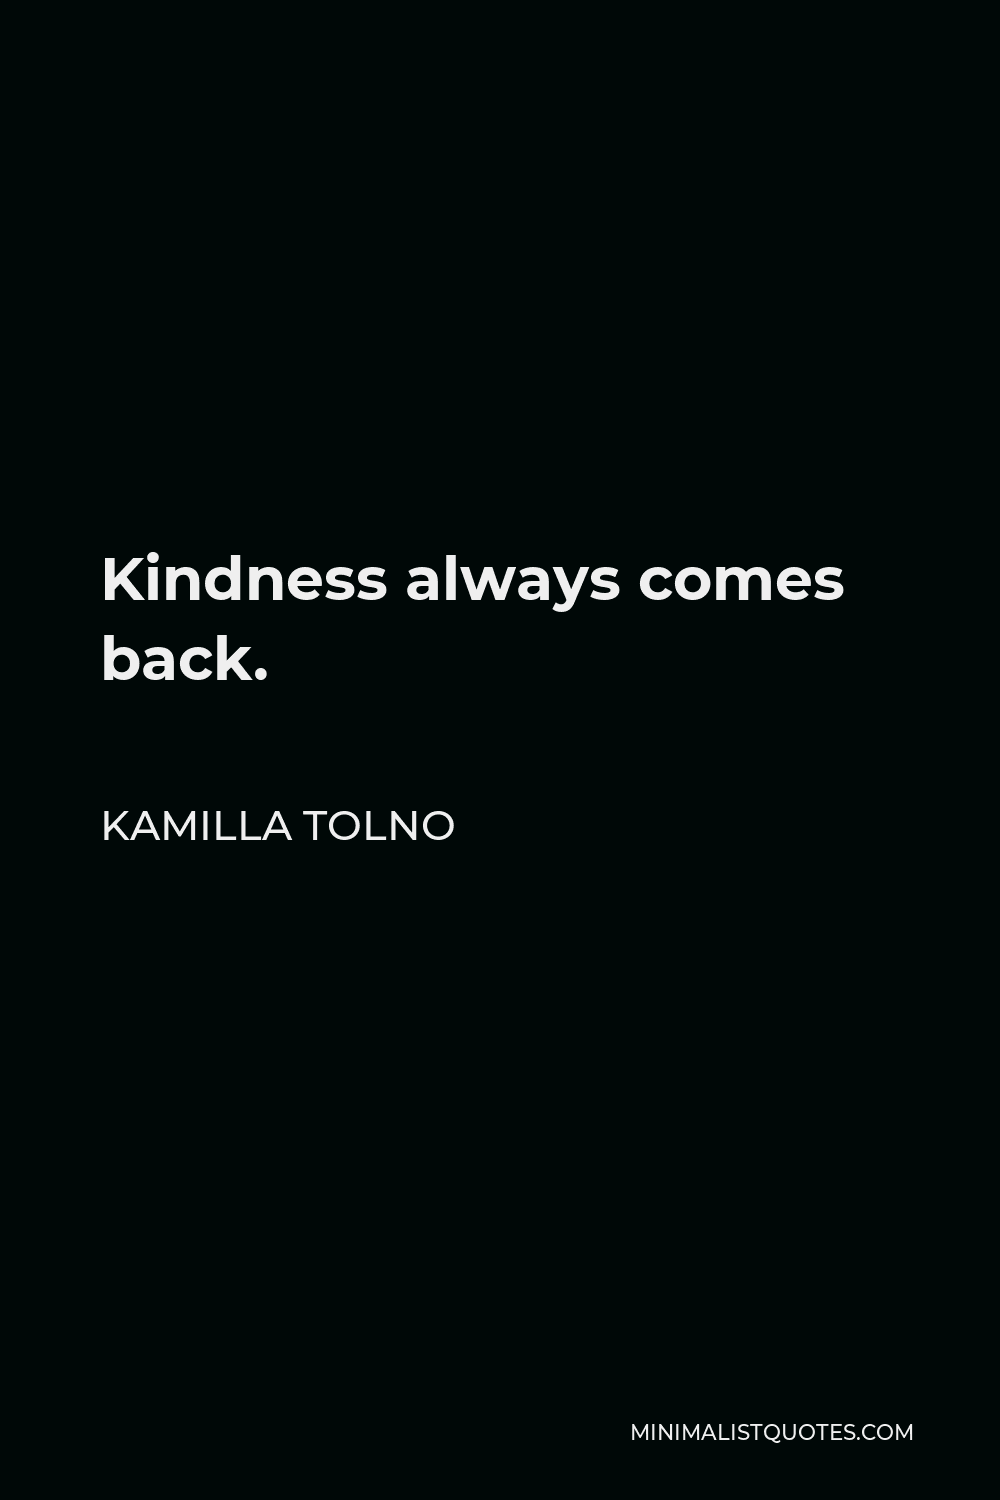 Kamilla Tolno Quote - Kindness always comes back.